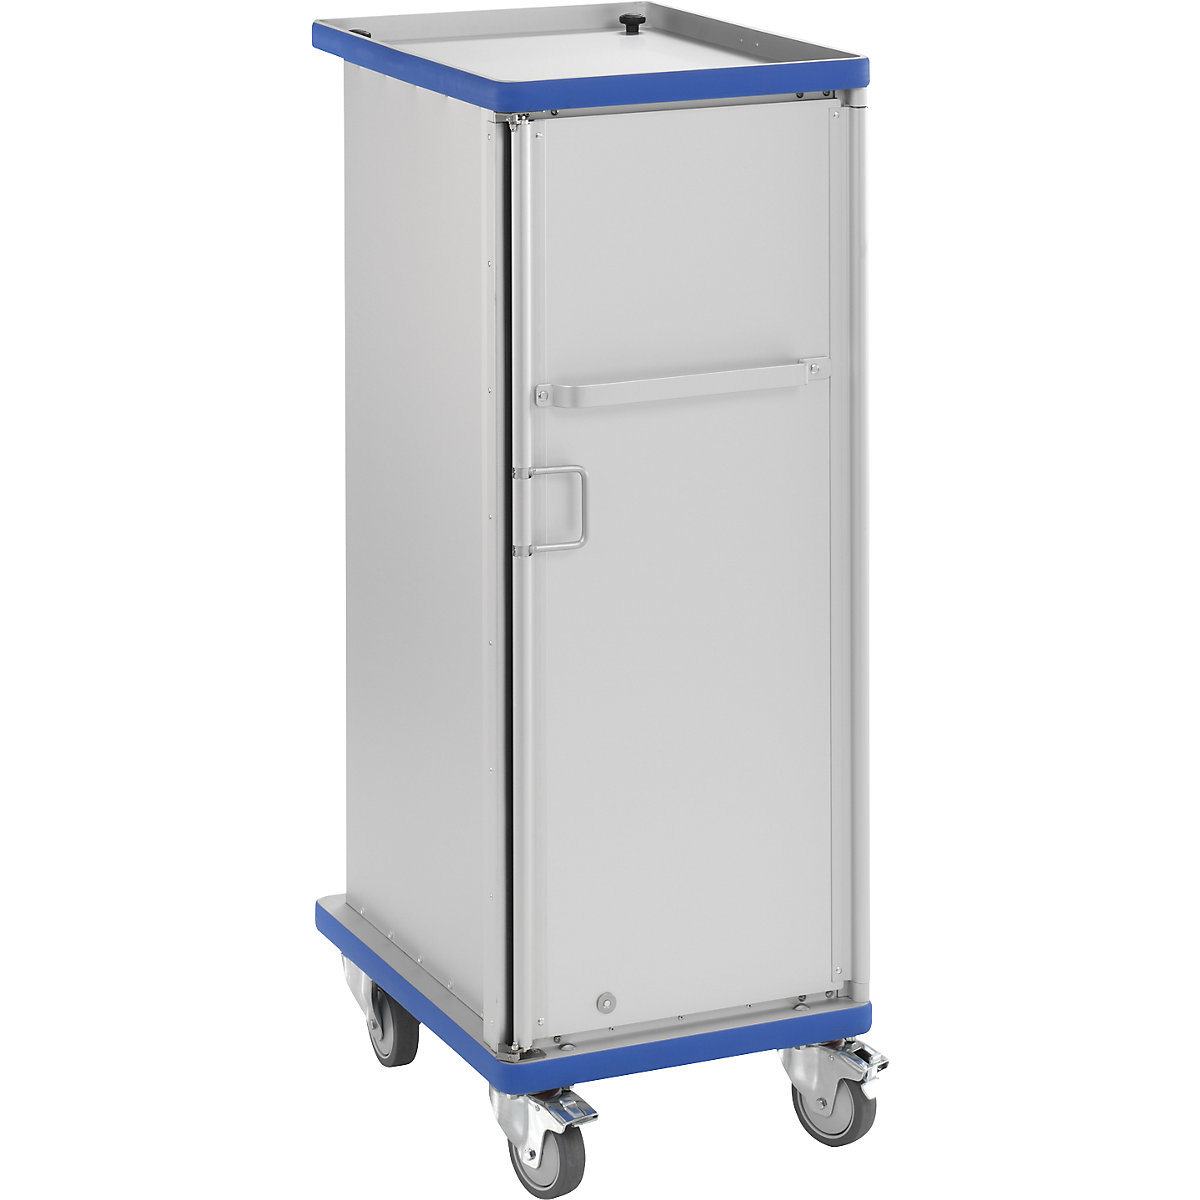 G®-CUP ISO E modular cupboard trolley